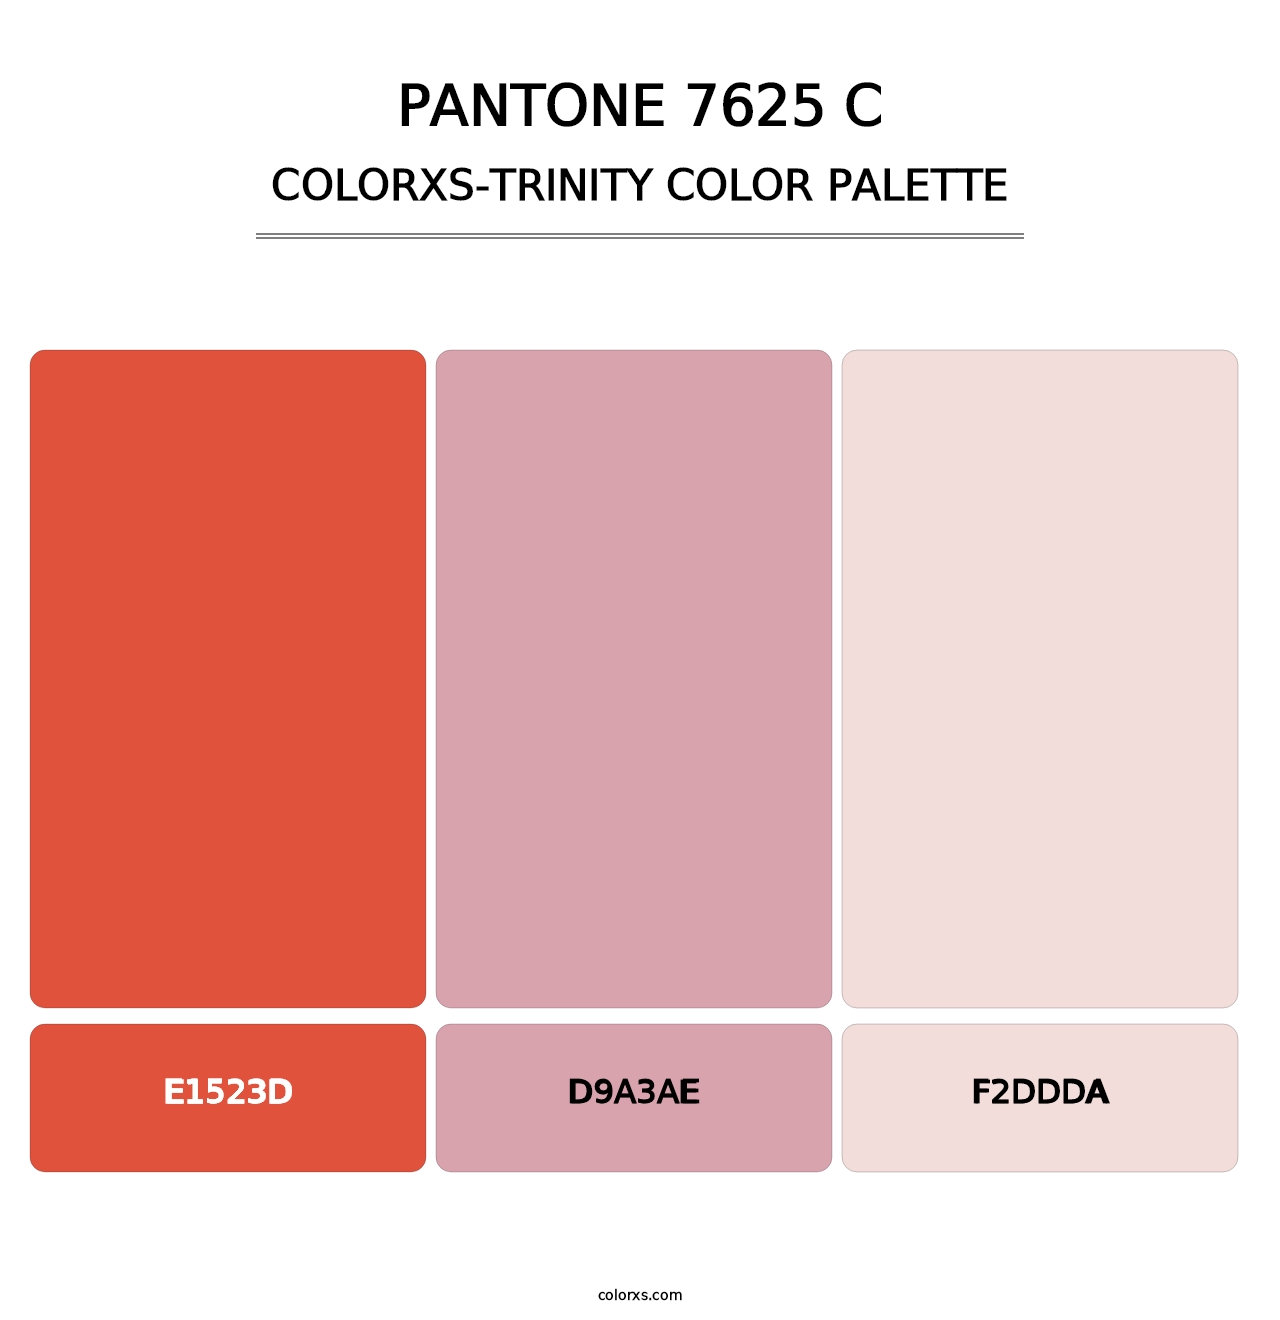 PANTONE 7625 C - Colorxs Trinity Palette